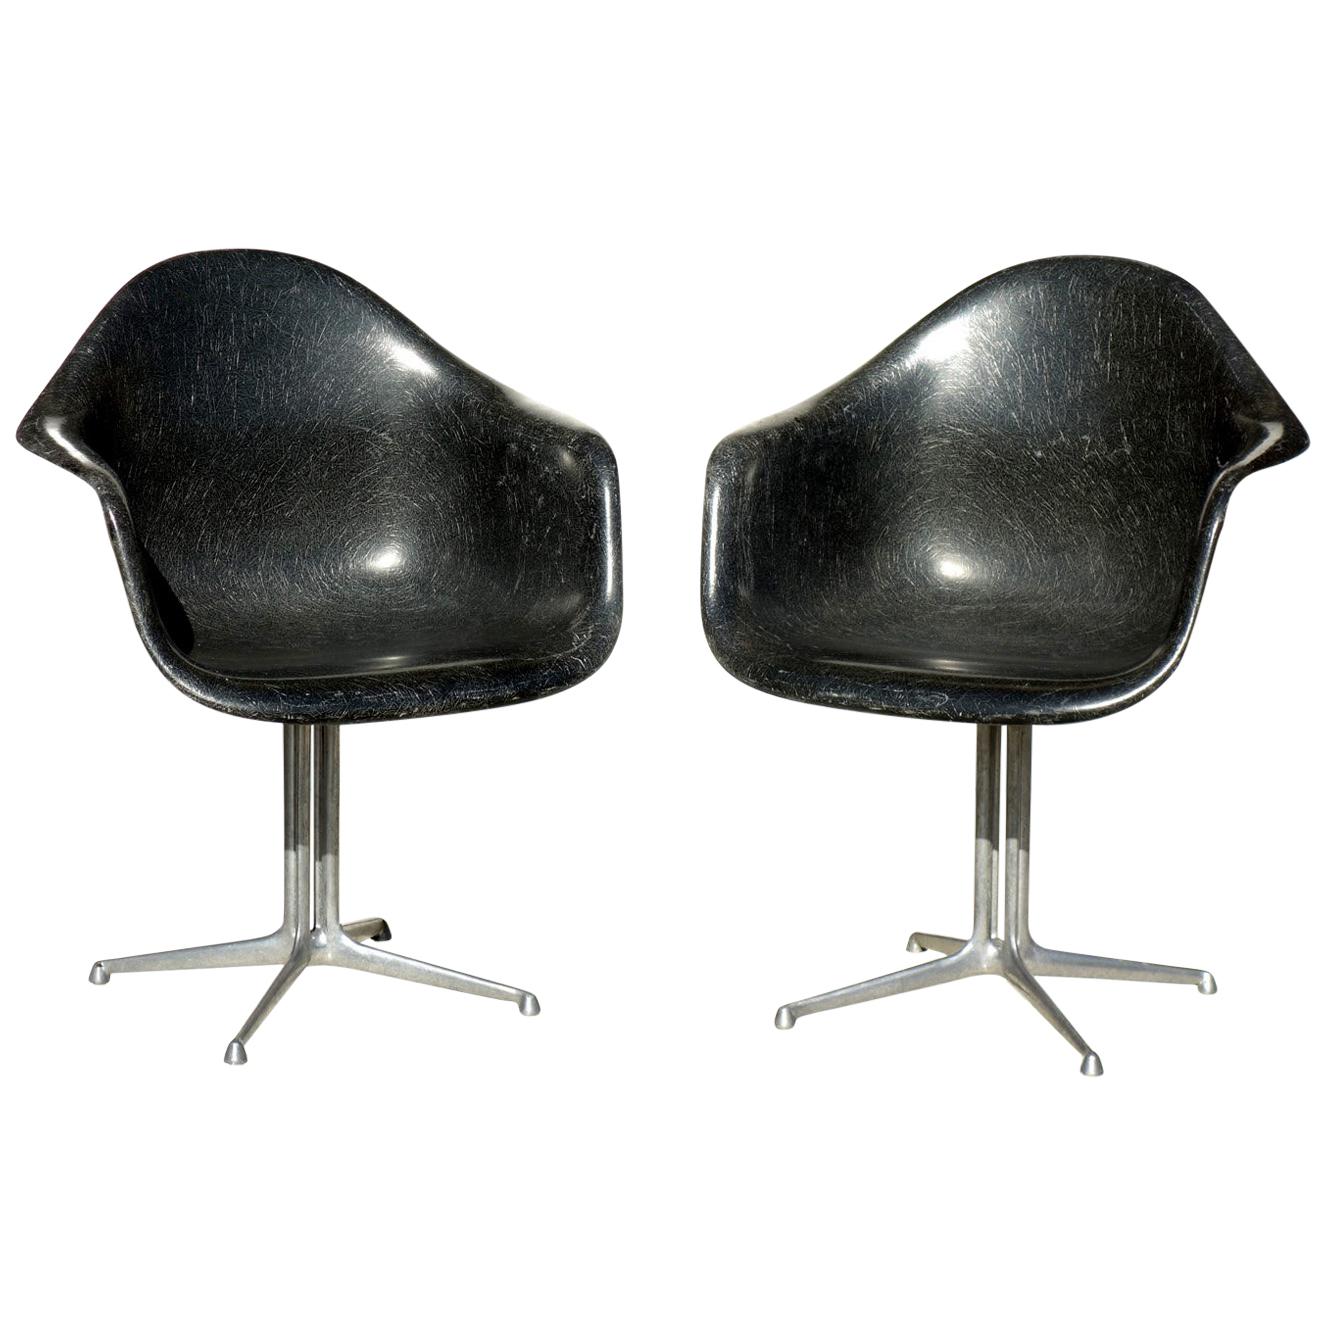 "La Fonda" C. Eames by H. Miller Space Age Design Fiberglass Shell Two Chair